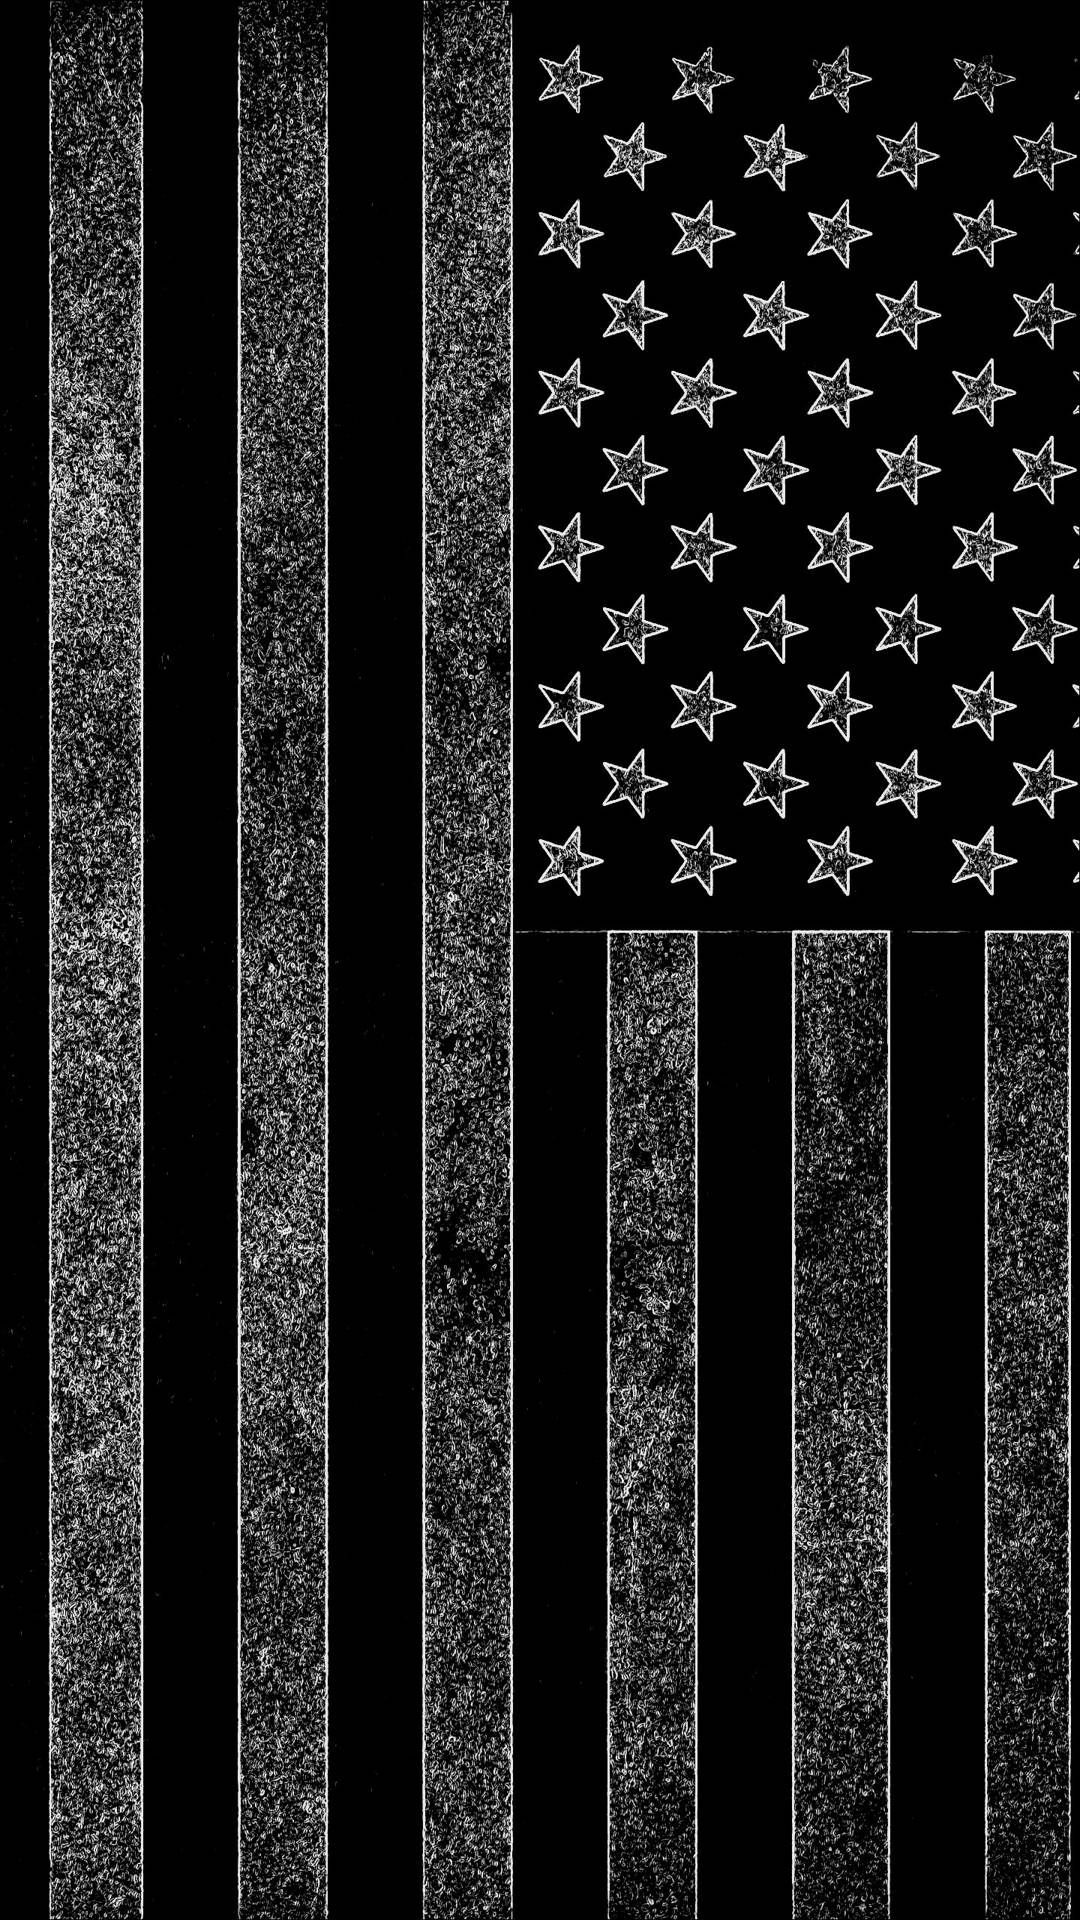 Black and White Flag Wallpaper Free Black and White Flag Background